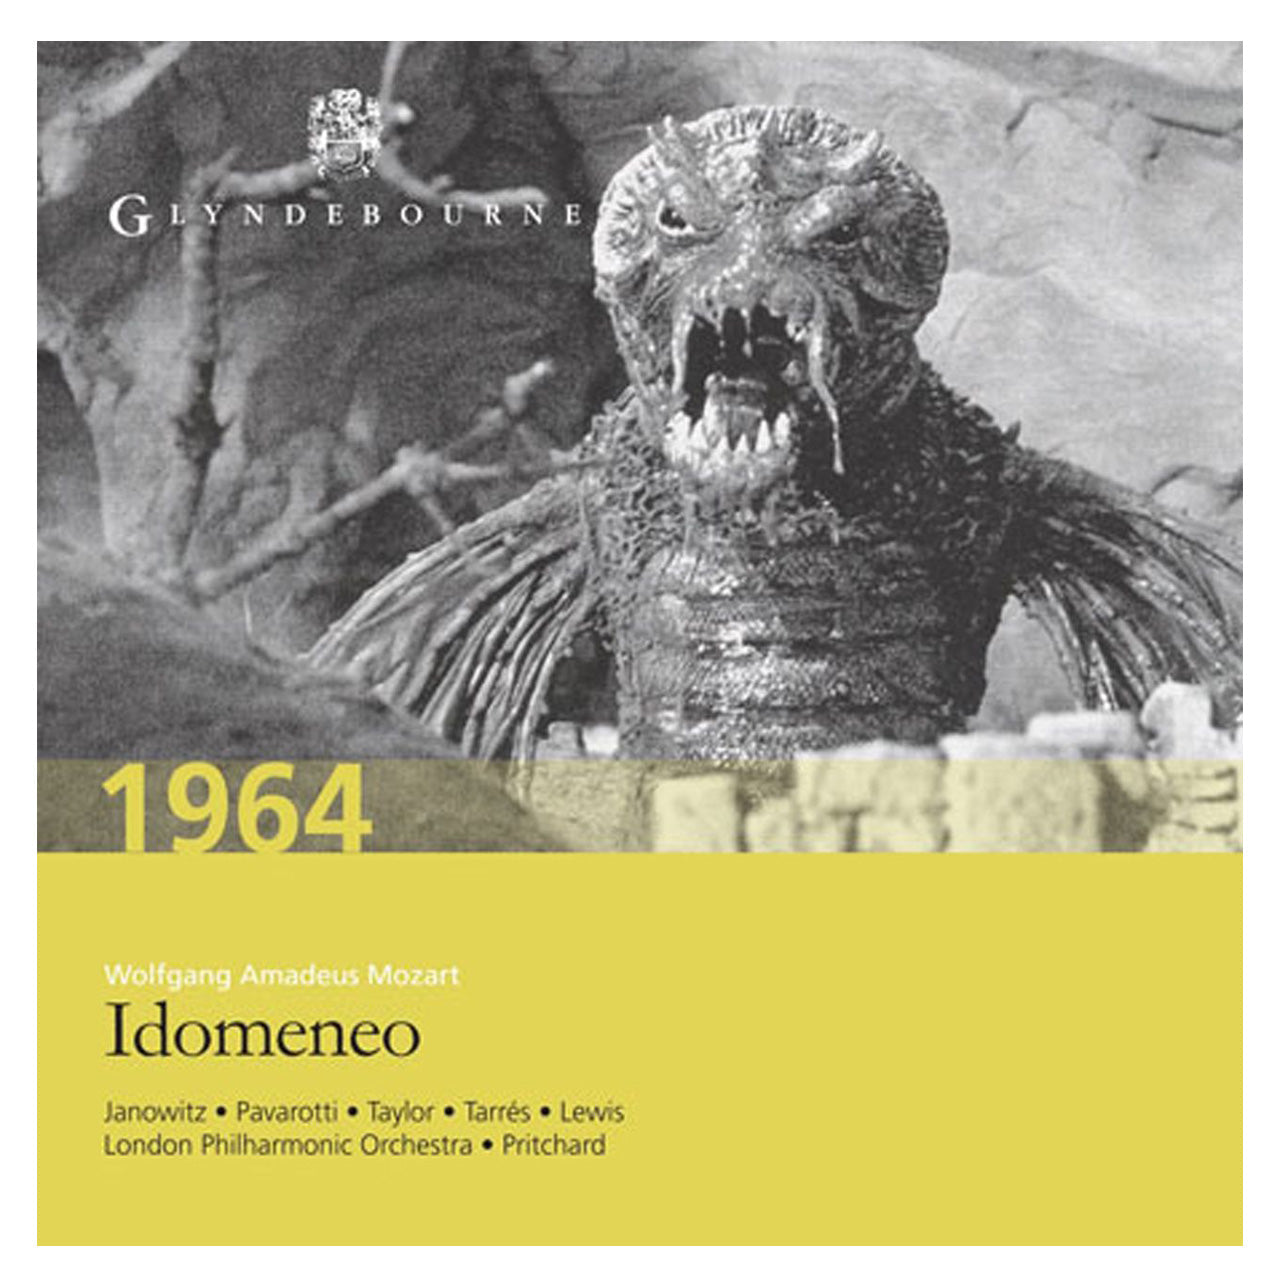 Idomeneo 1964 CD Glyndebourne Shop